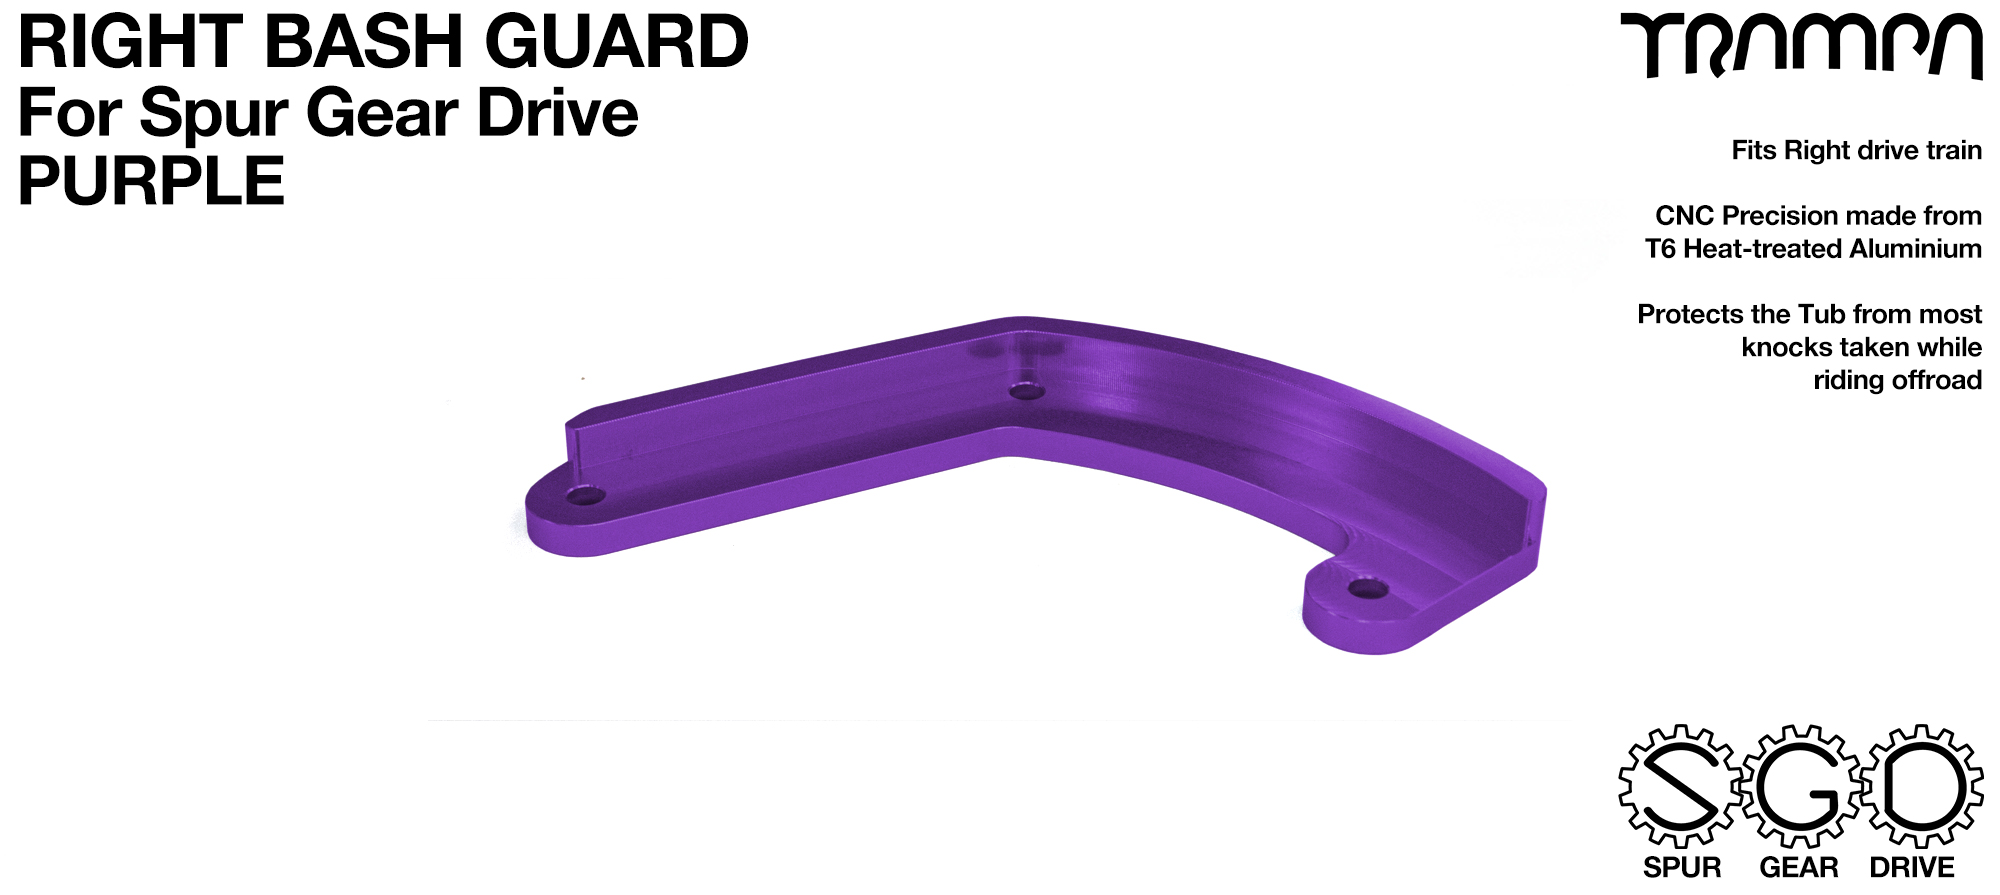 SPUR Gear Drive Bash Guard - RIGHT Side - PURPLE